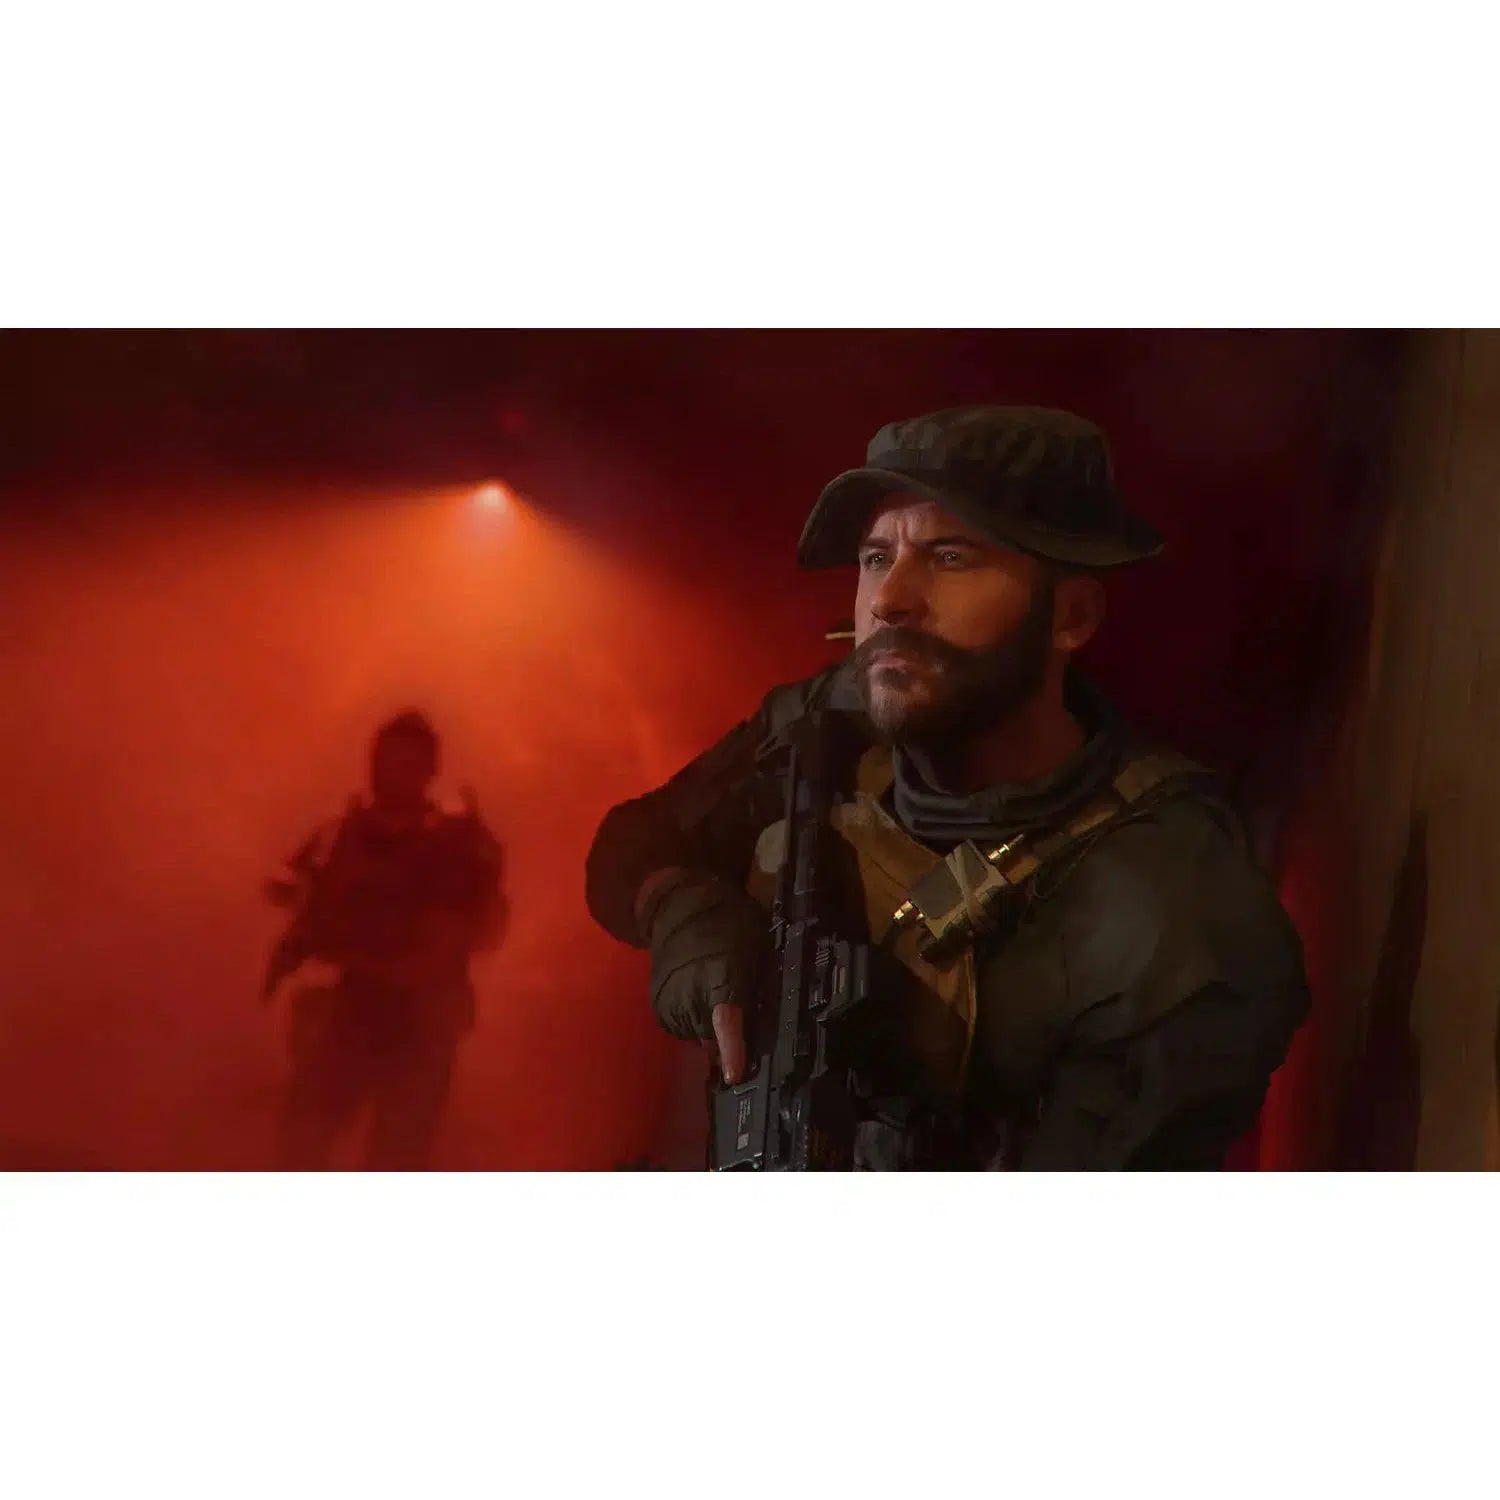 Call of Duty: Modern Warfare III (Xbox)